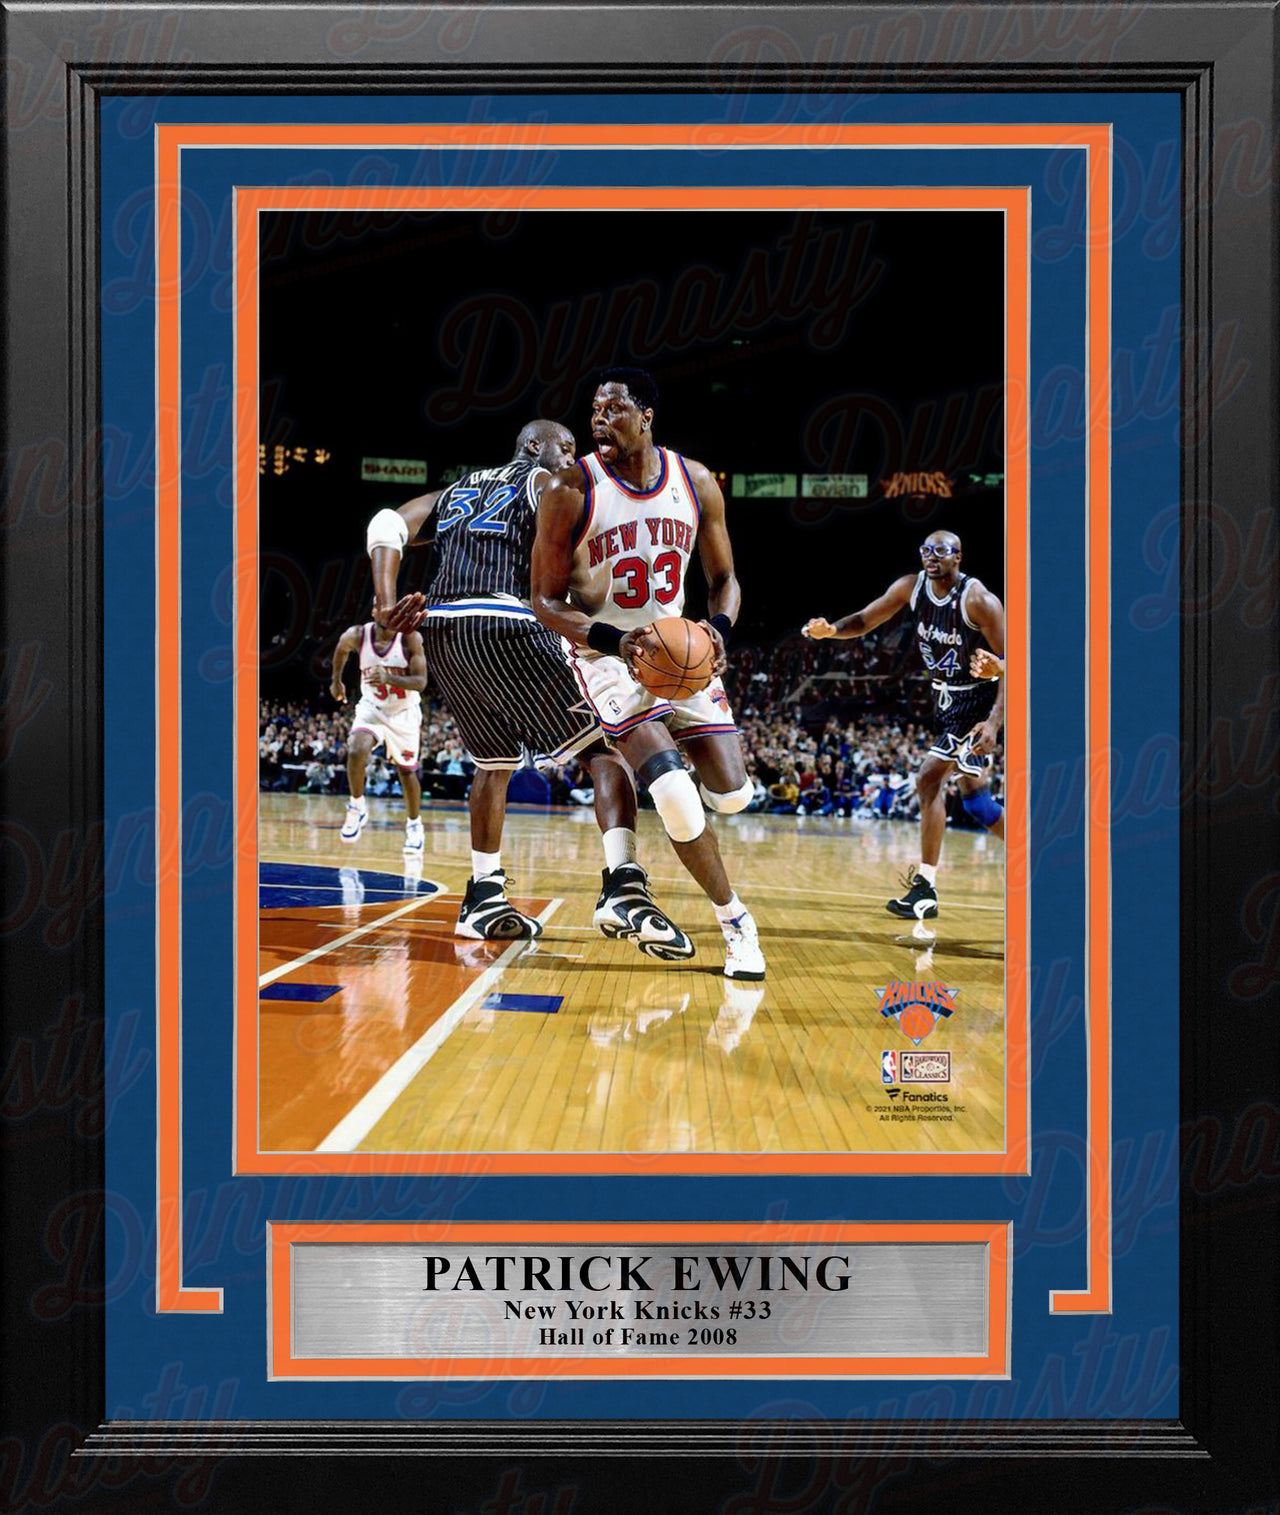 NEW YORK KNICKS on X: Patrick Ewing and the Original Dream Team